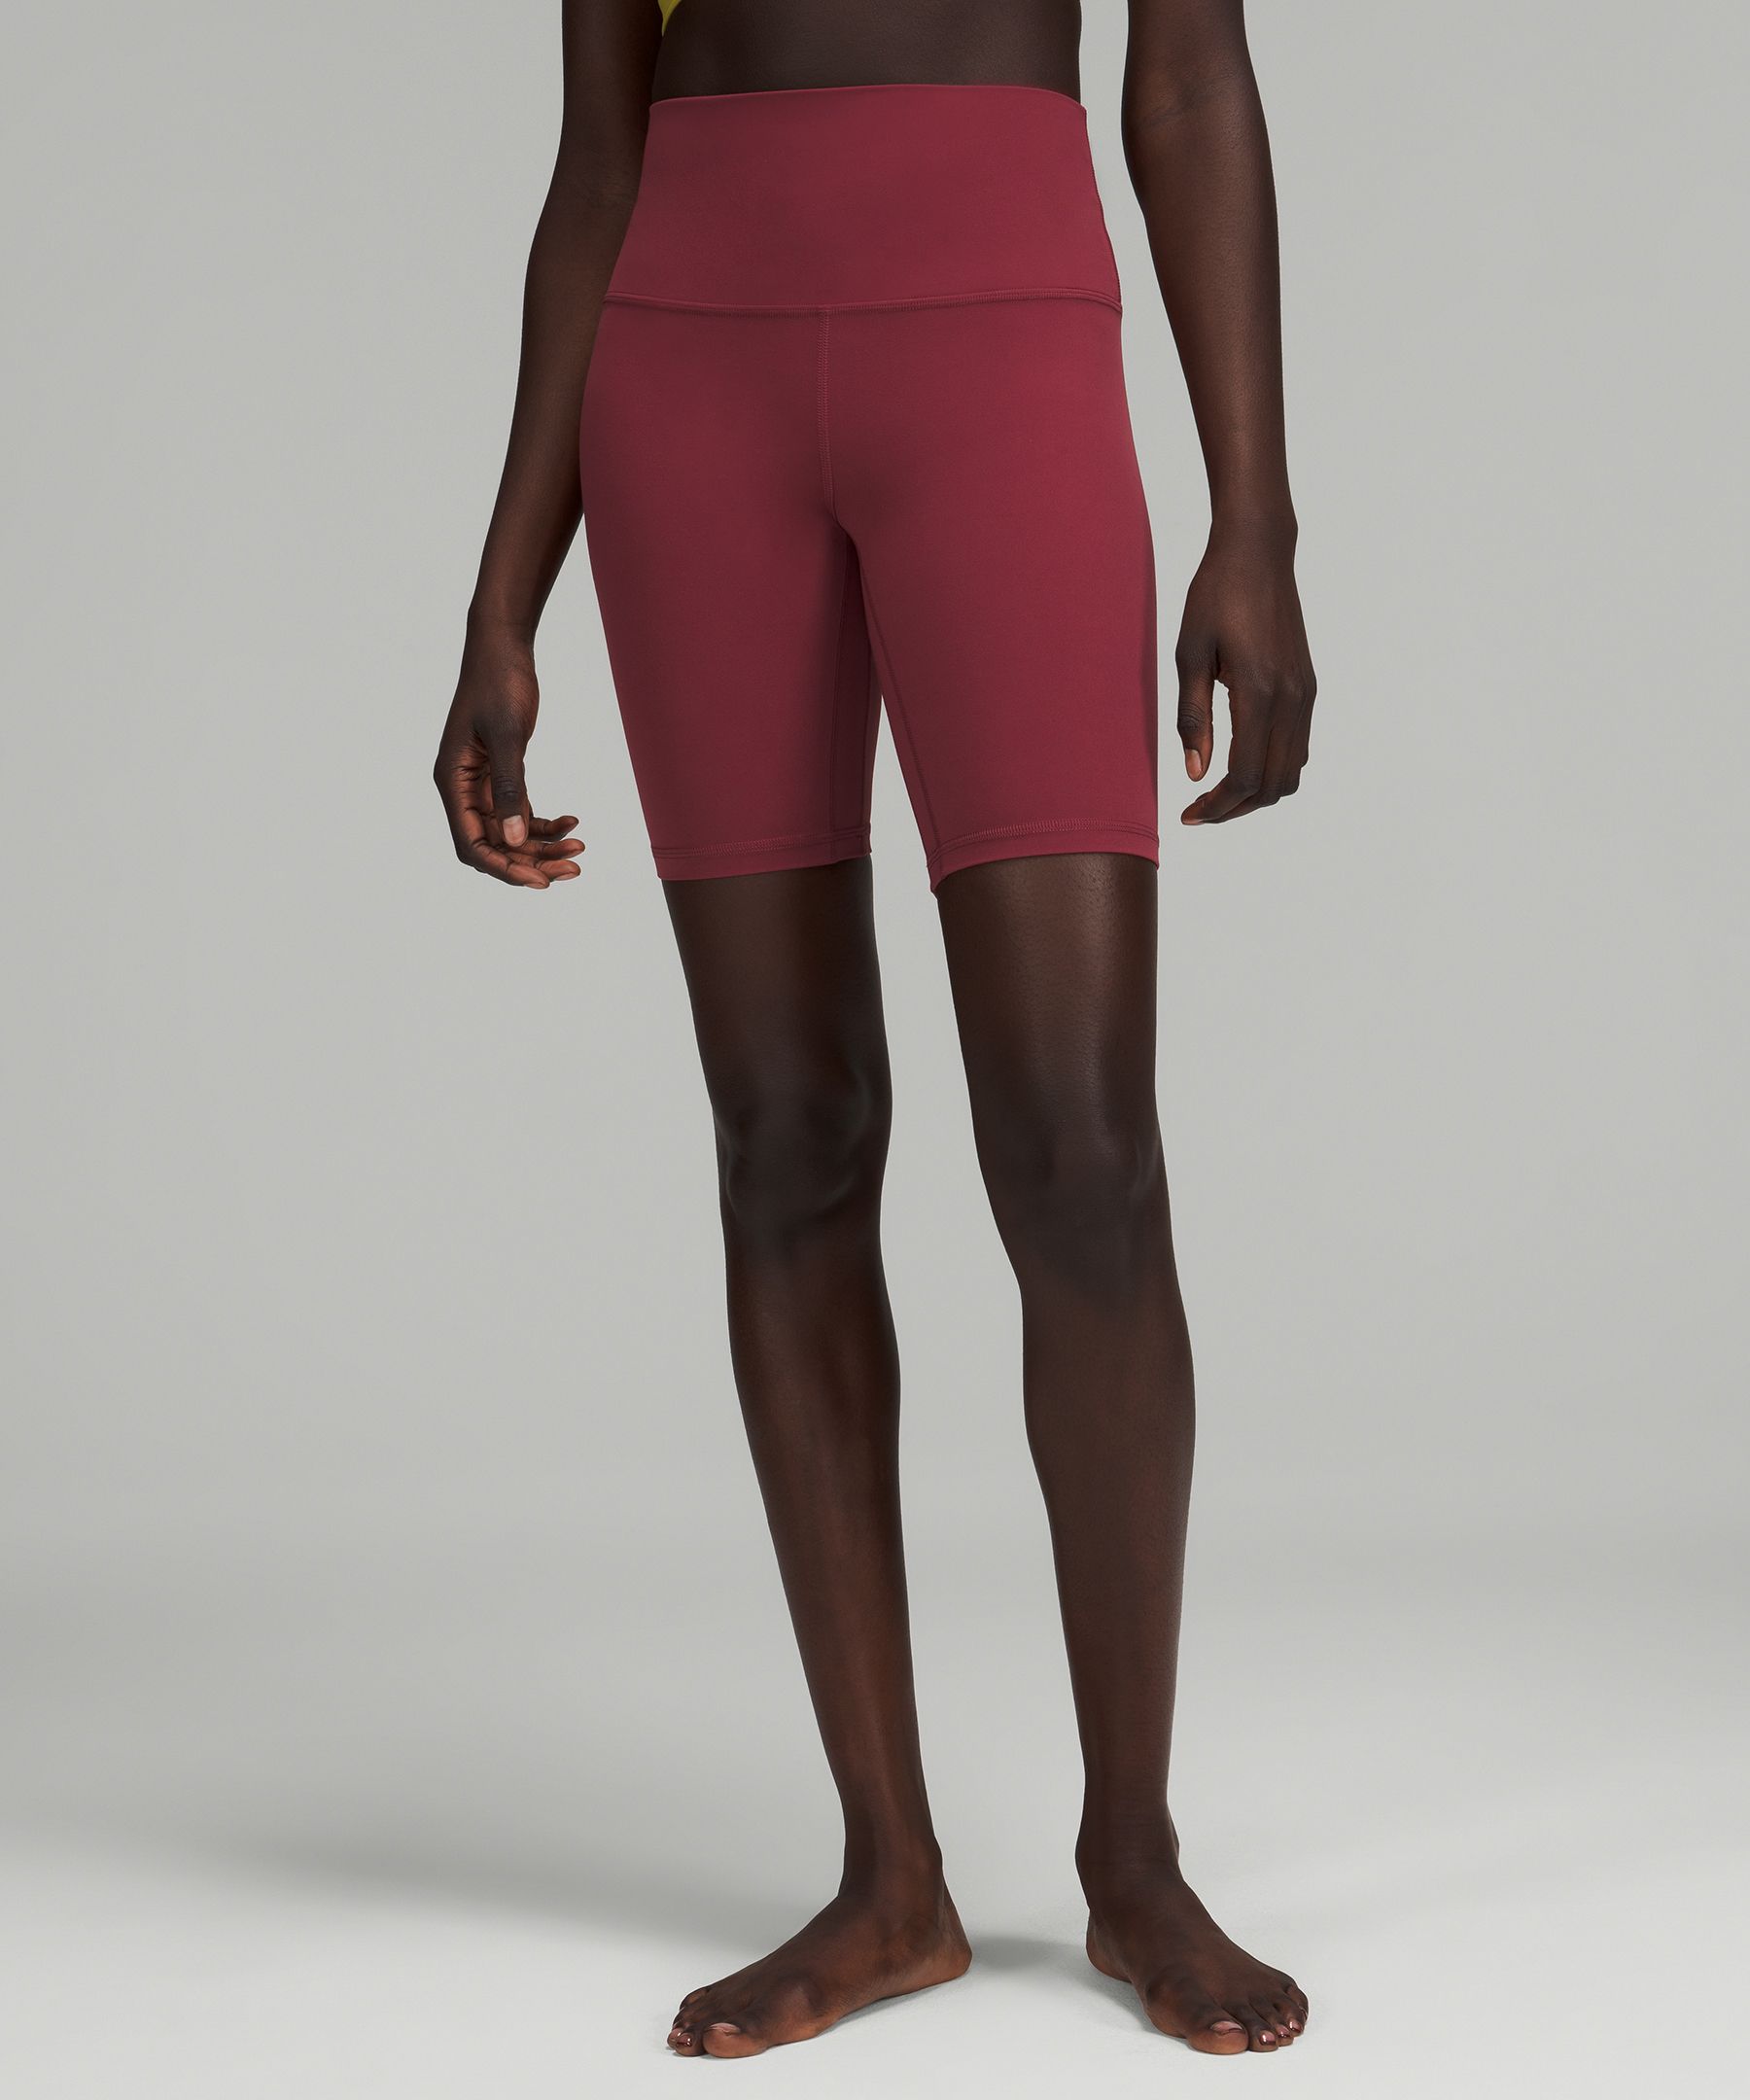 Lululemon Align™ High-rise Shorts 8"